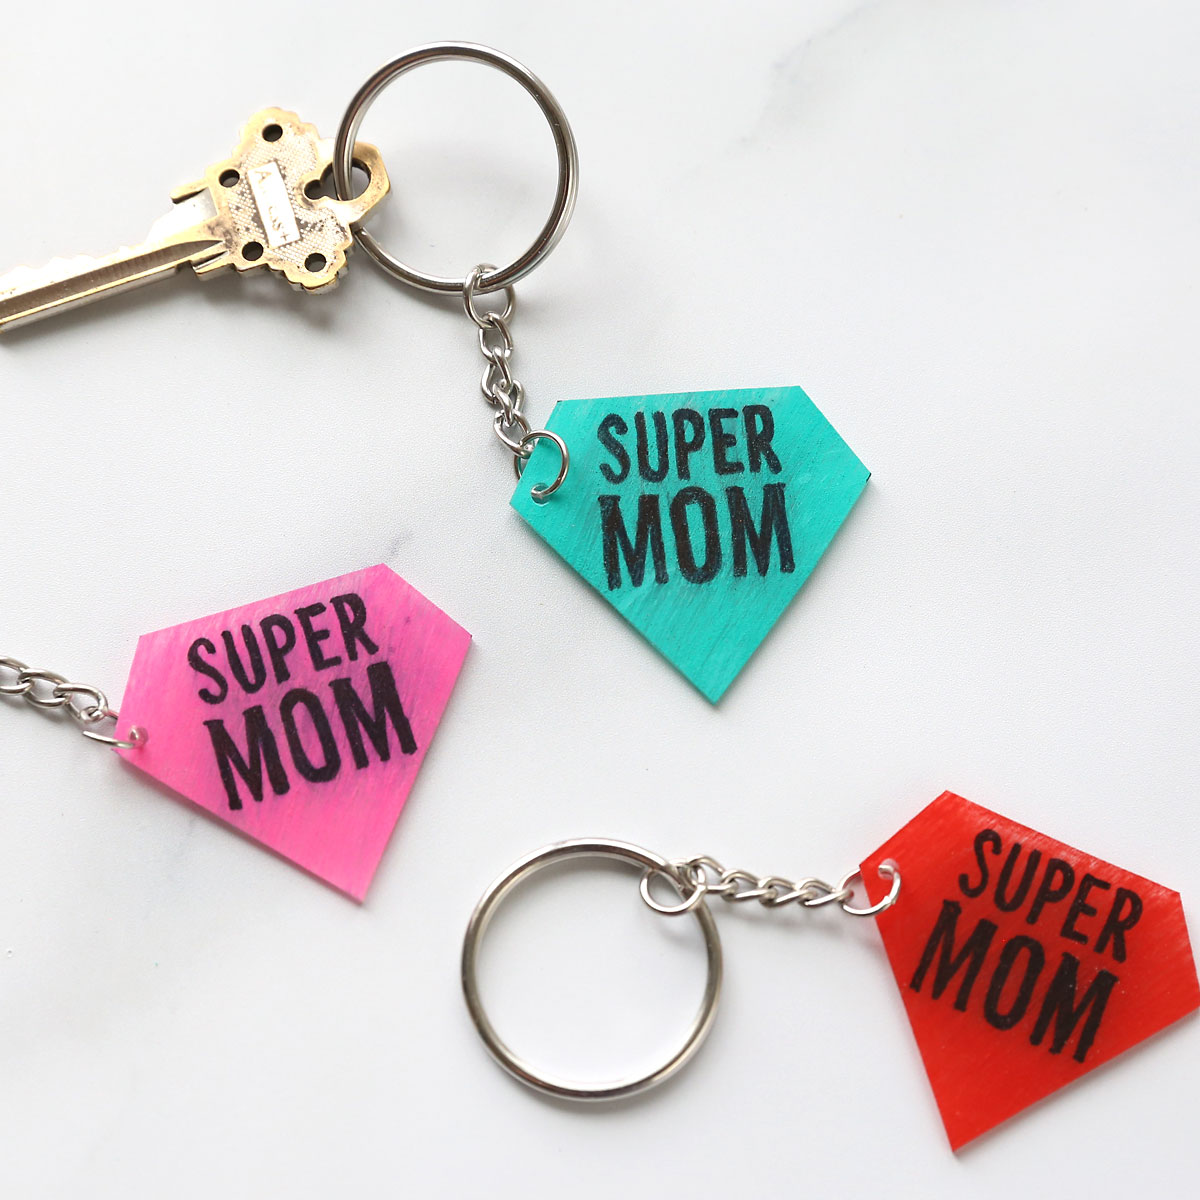 Super mom shrinky dink keychains